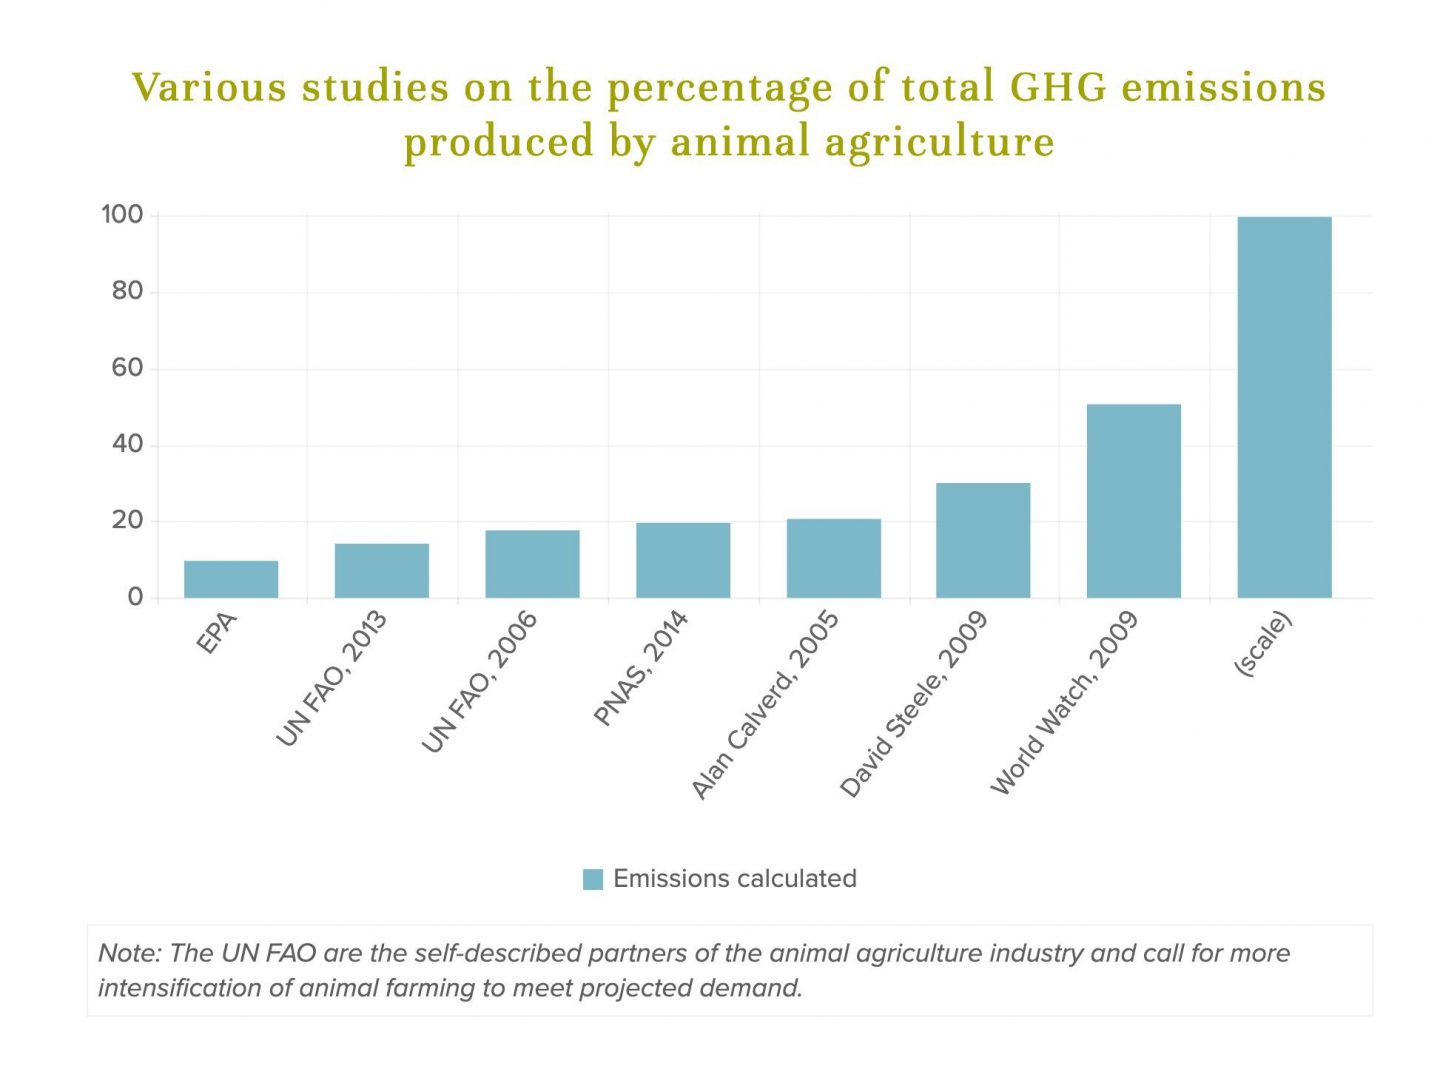 GHG emissions agriculture